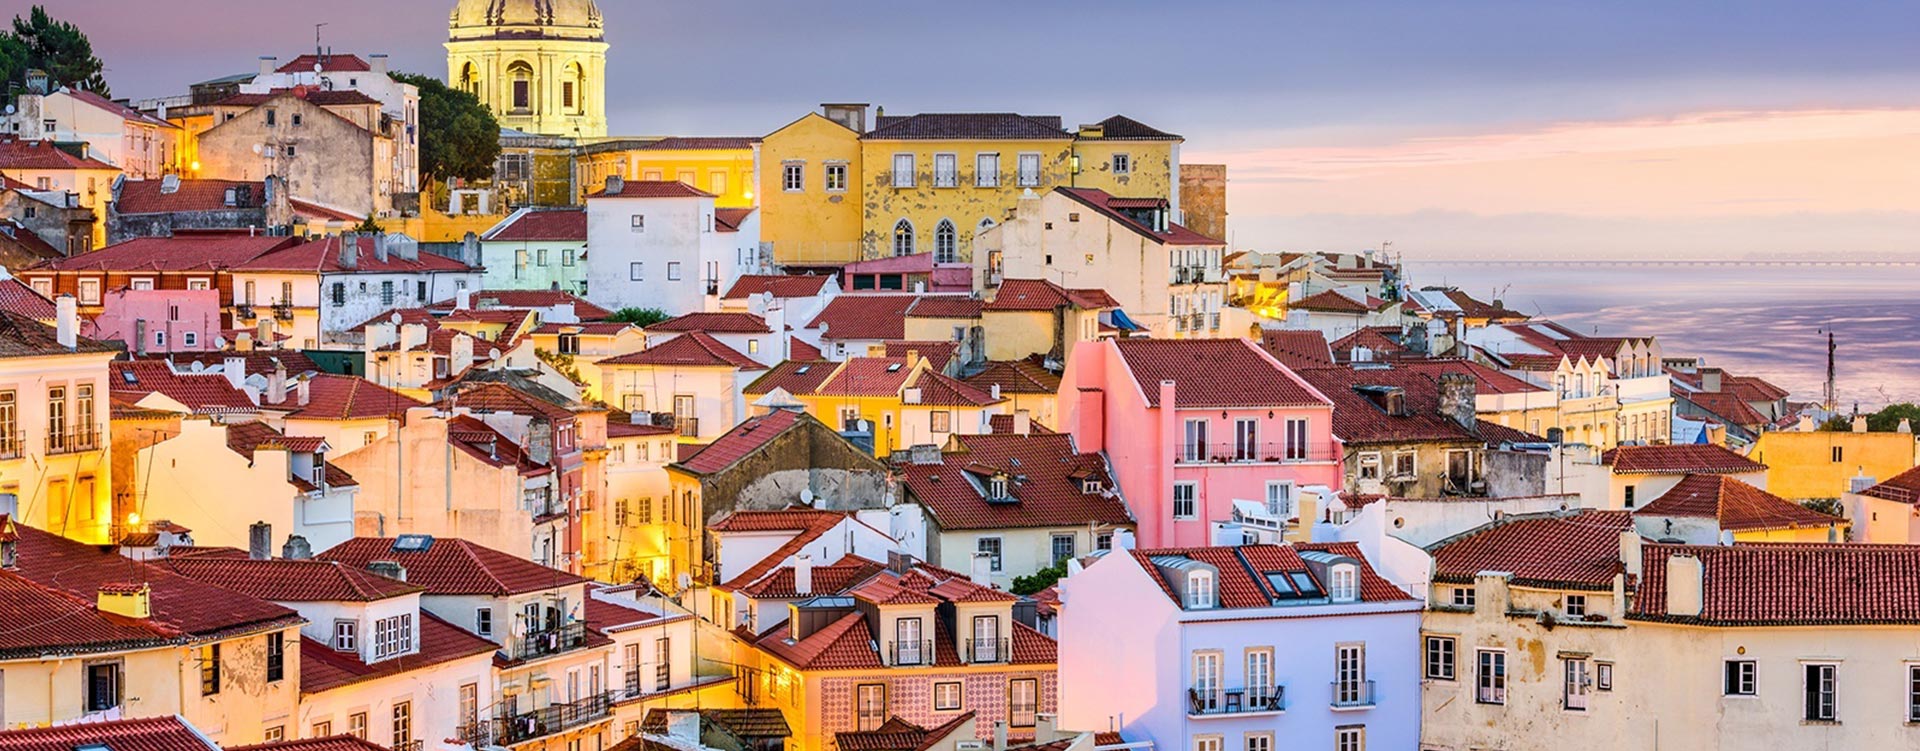 Explore last minute flight deals to Lisbon for excursions to Lisbon Oceanarium. - IFlyFirstClass